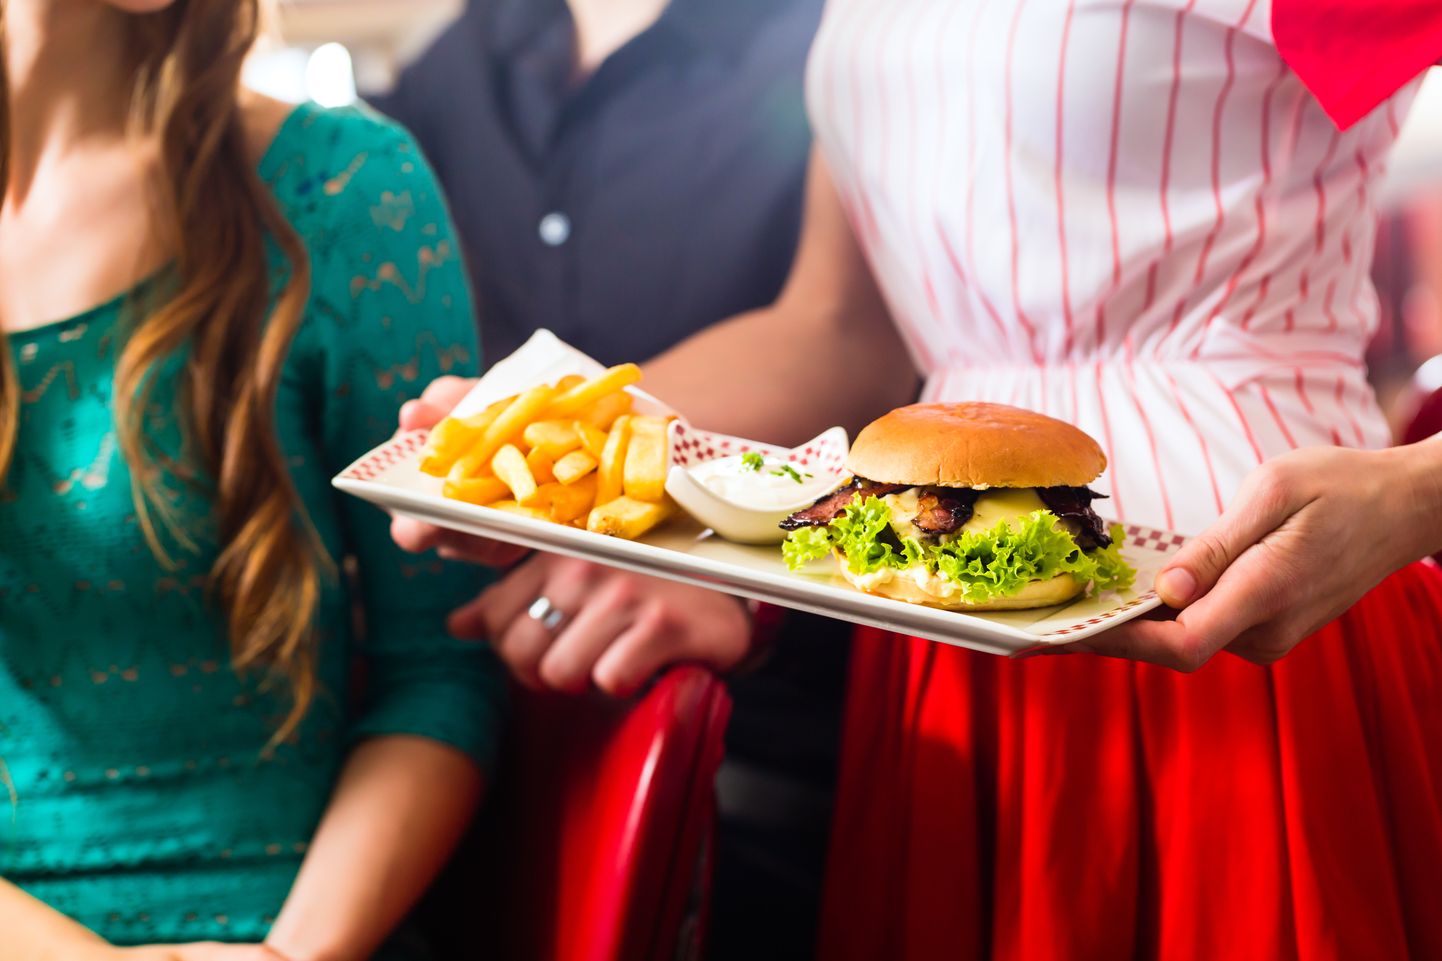 People in American diner or restaurant eating burger